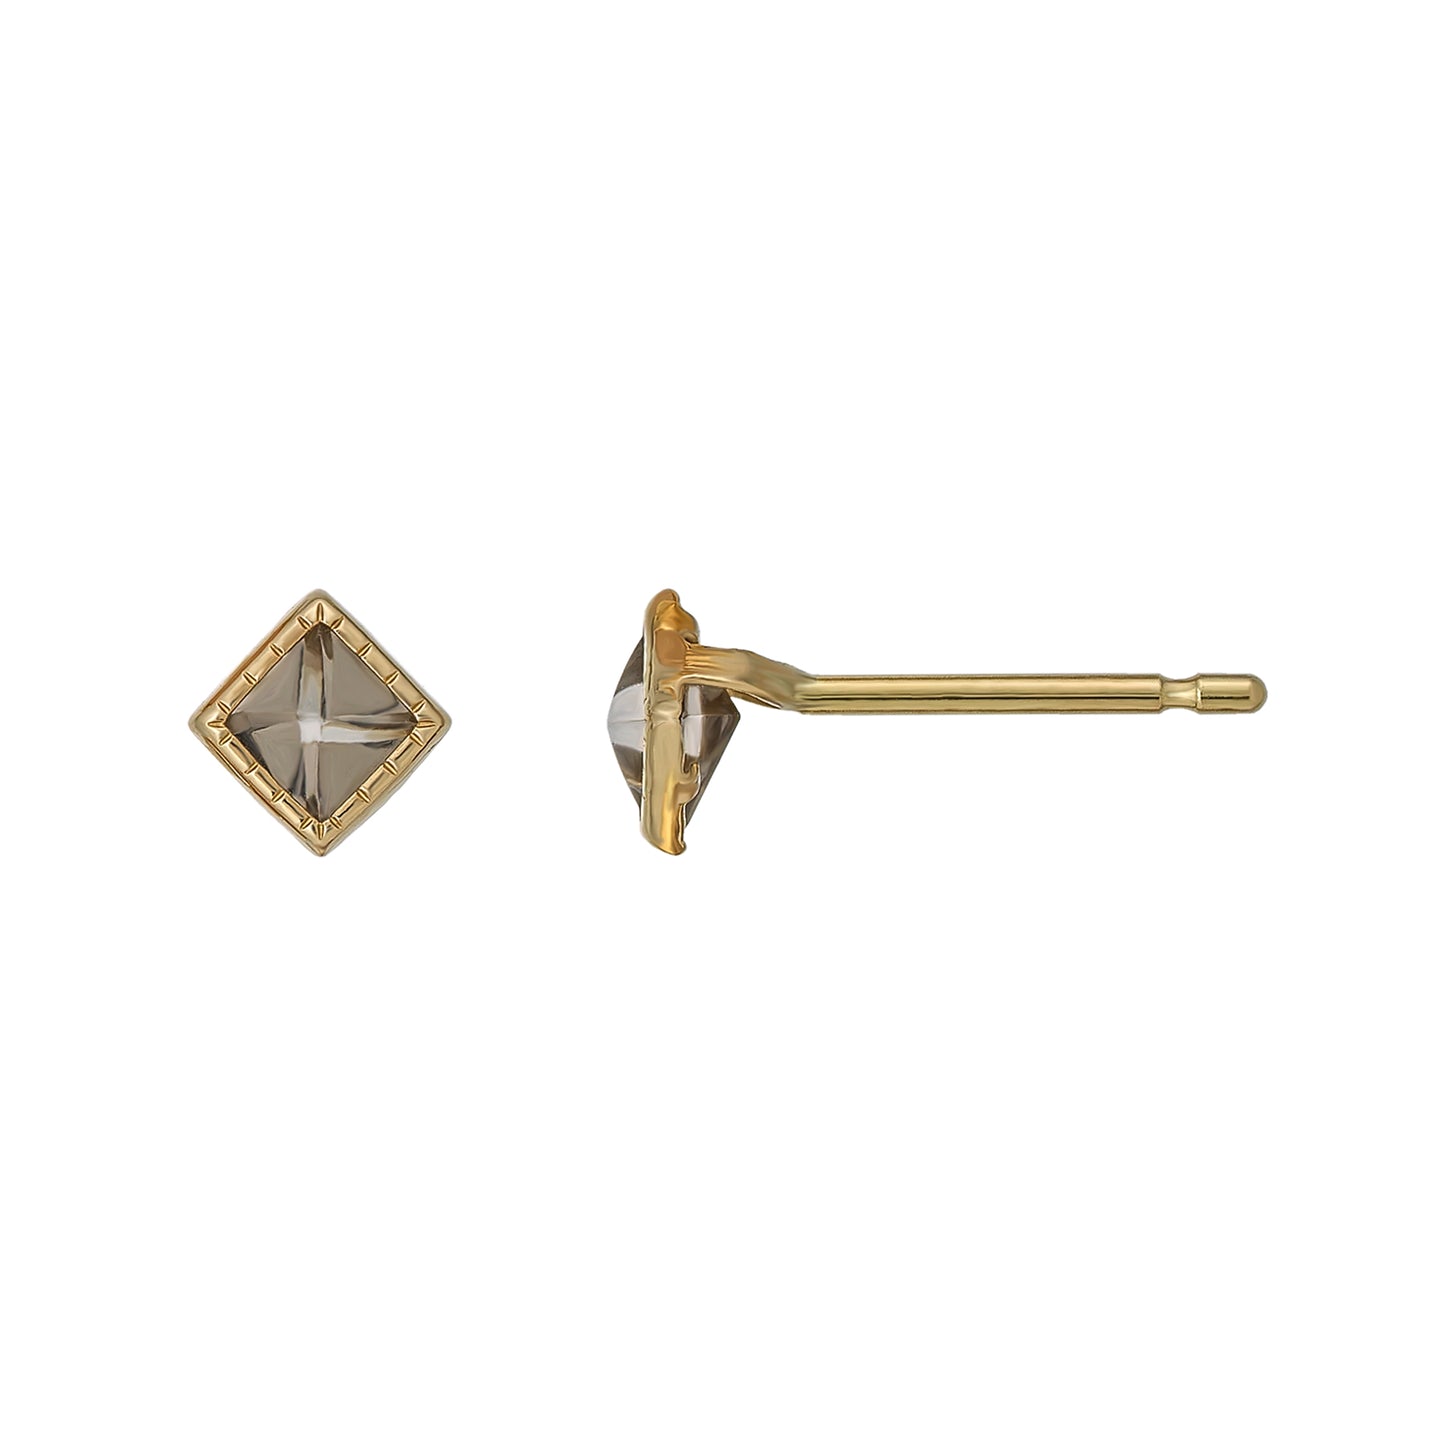 [Second Earrings] 18K Yellow Gold Smoky Quartz Pyramidal Cut Earrings - Product Image